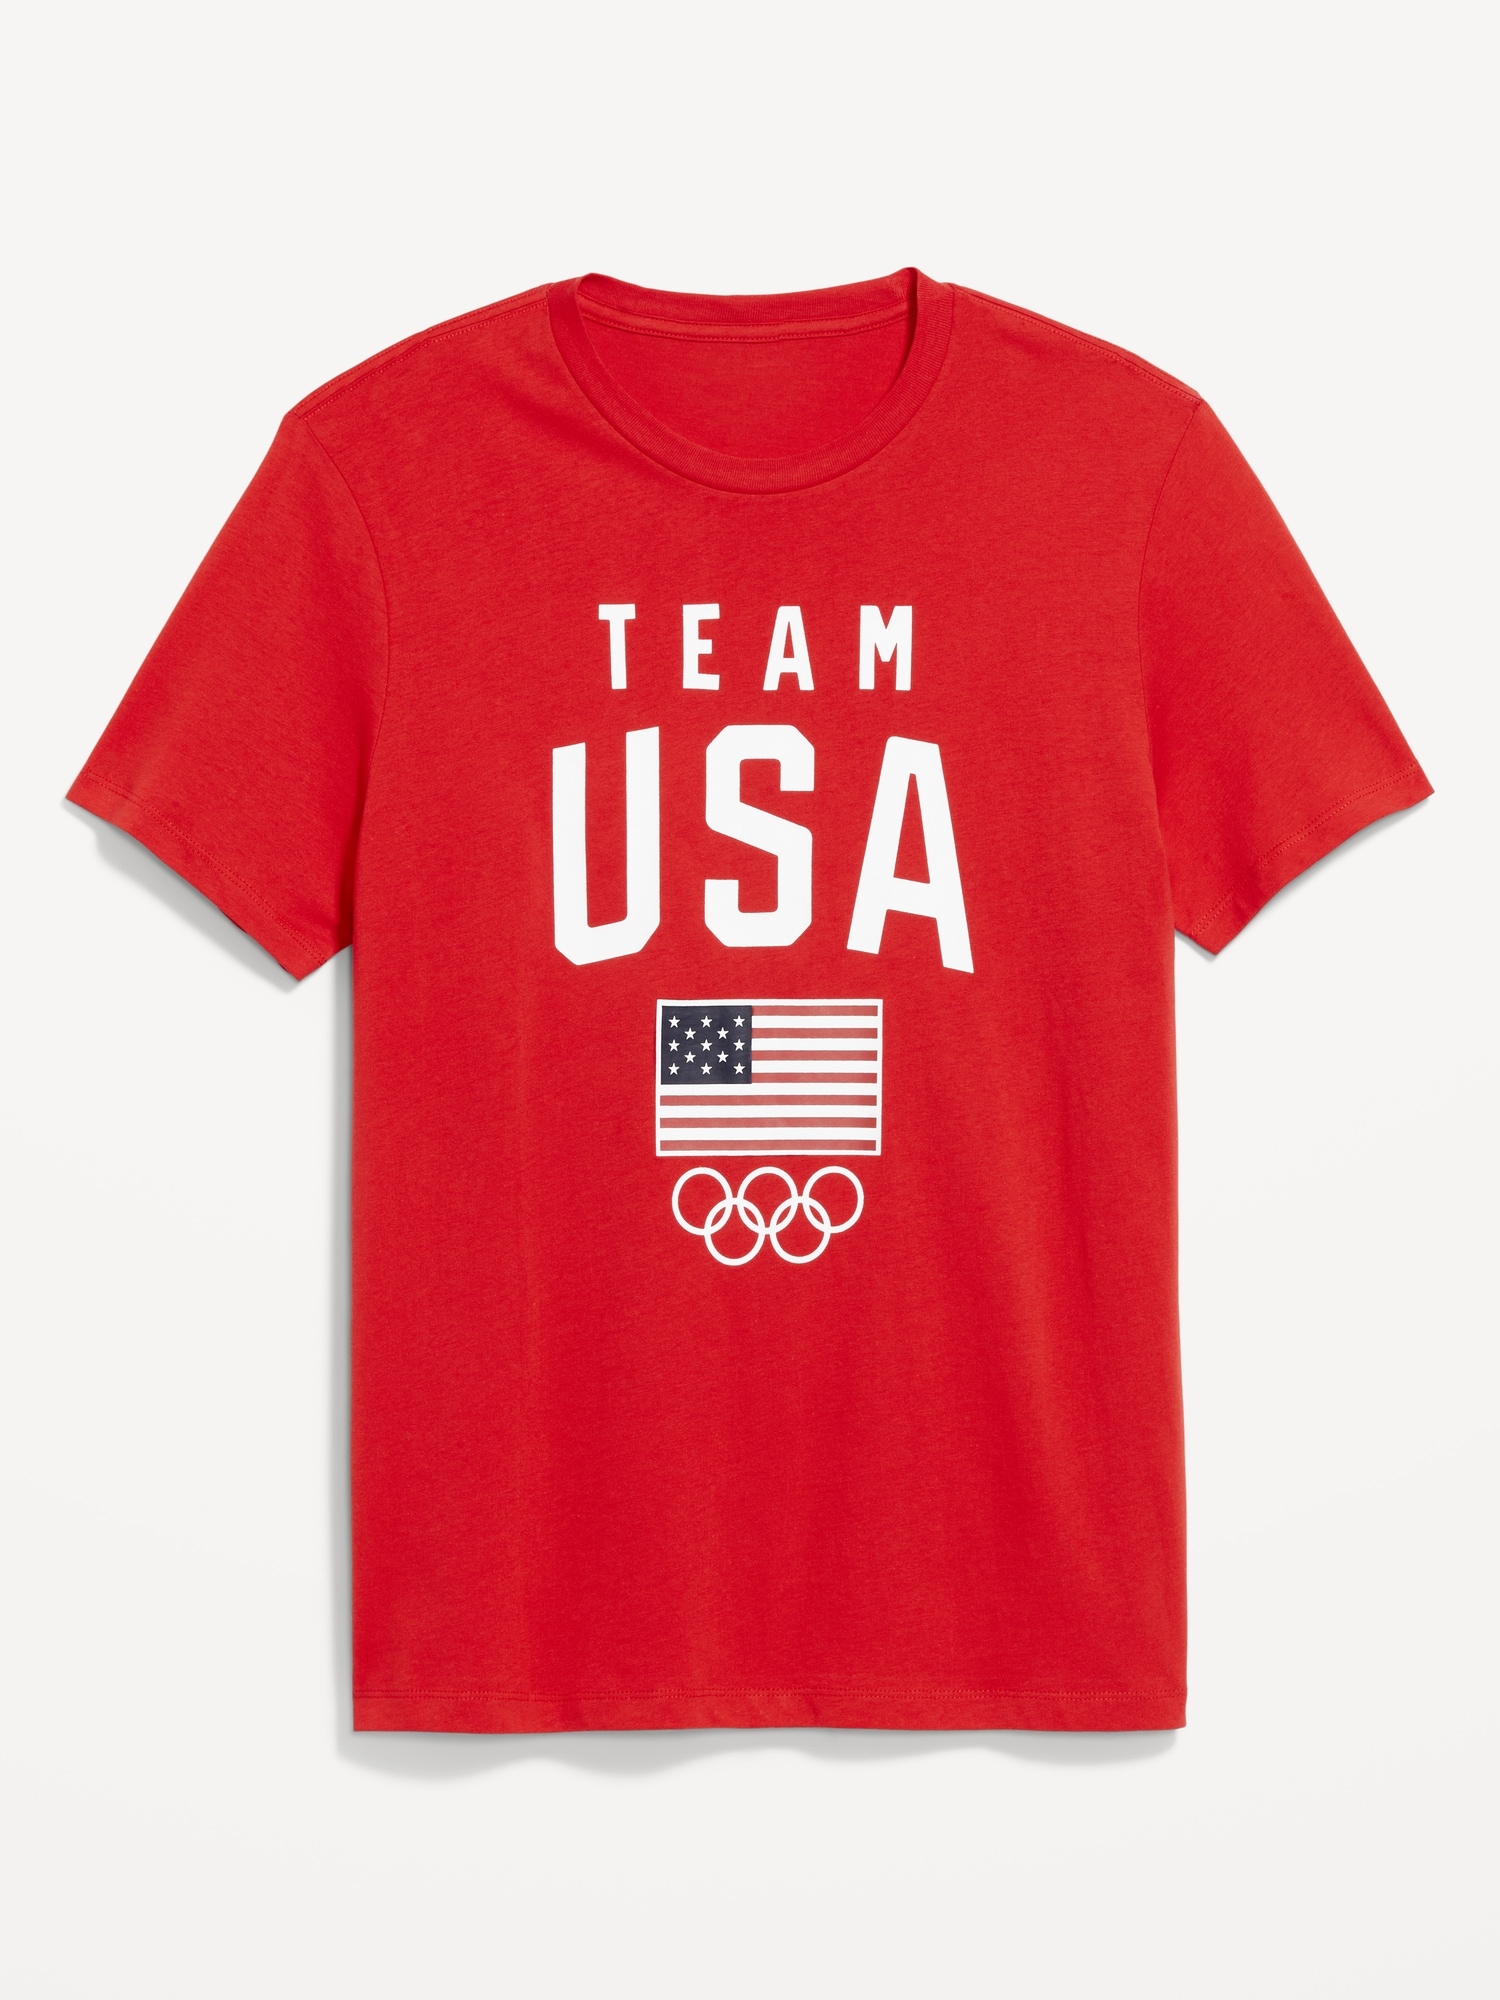 IOC Heritage© T-Shirt